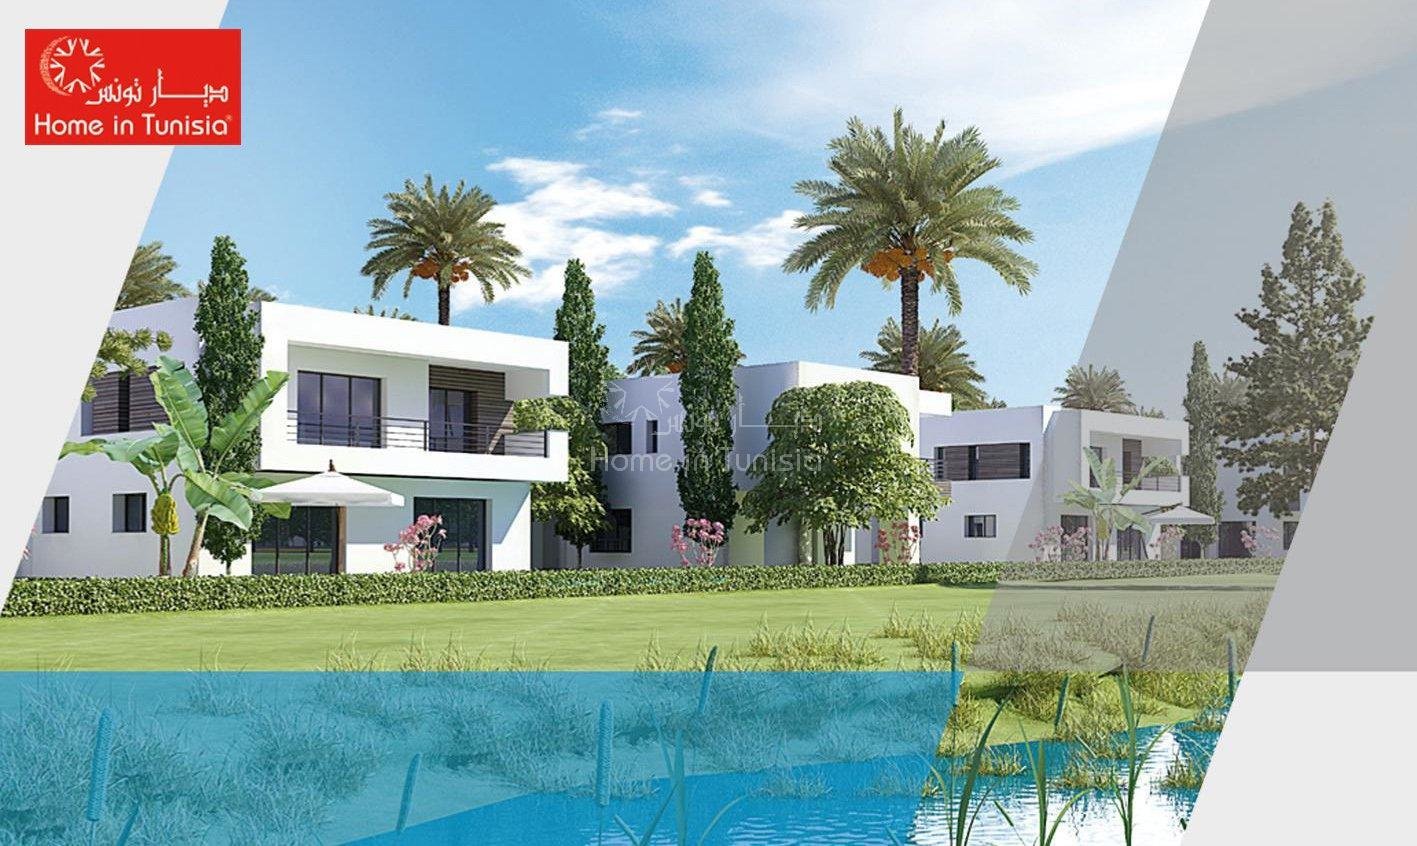 Villa golf isolée neuve de 345 m2 avec 4 chambres terrasse jardin piscine garage